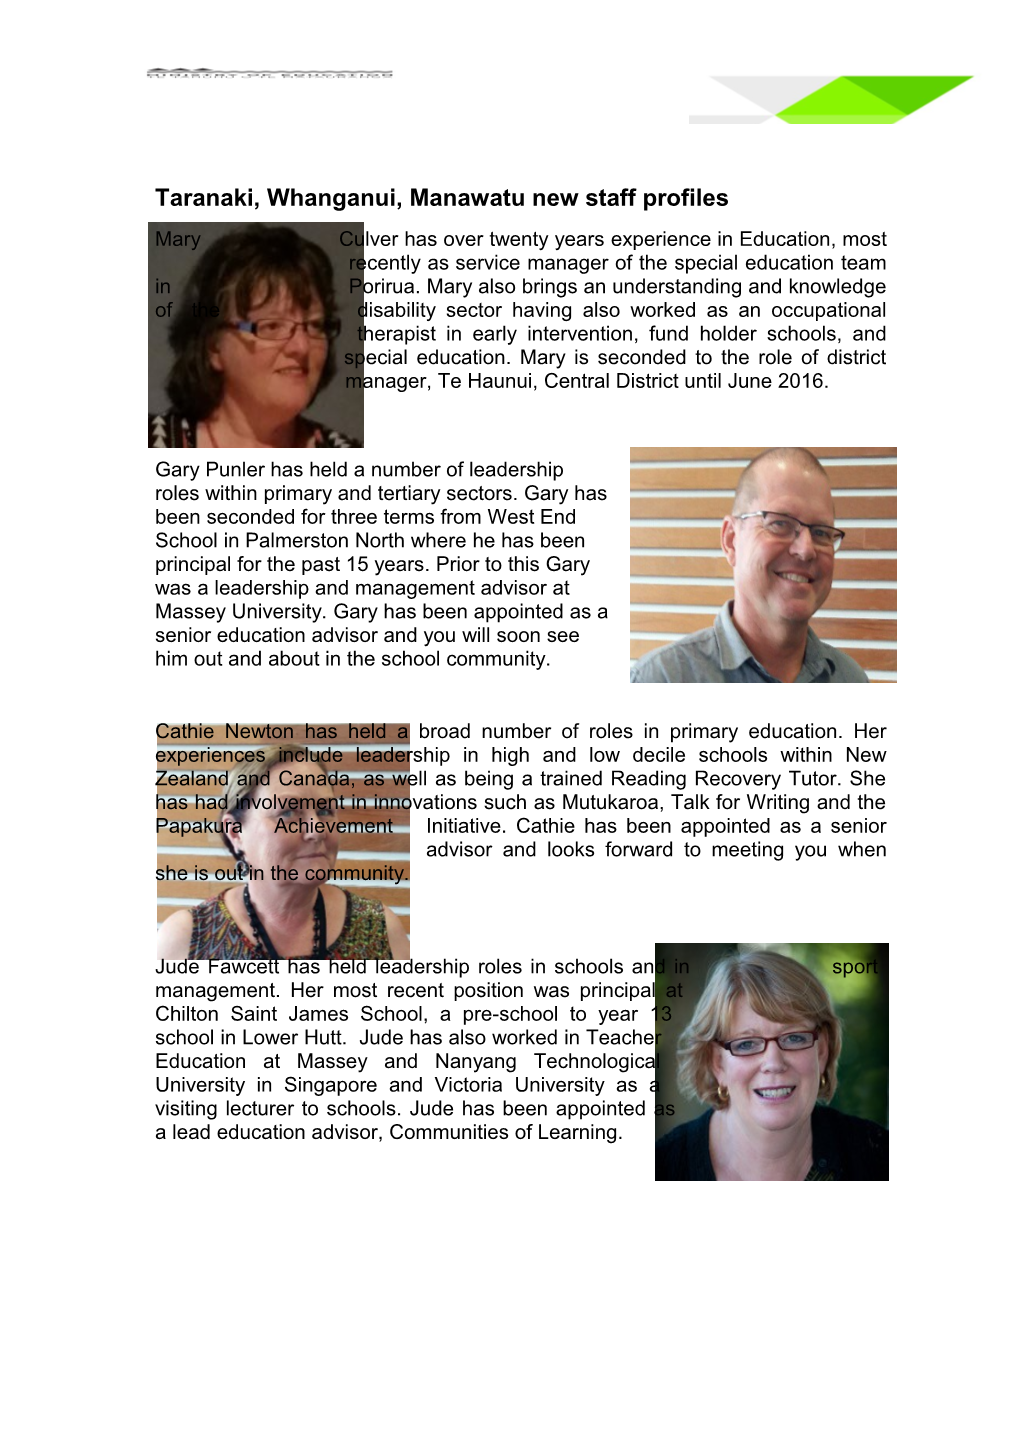 Taranaki, Manawatu and Whanganui New Staff Profiles